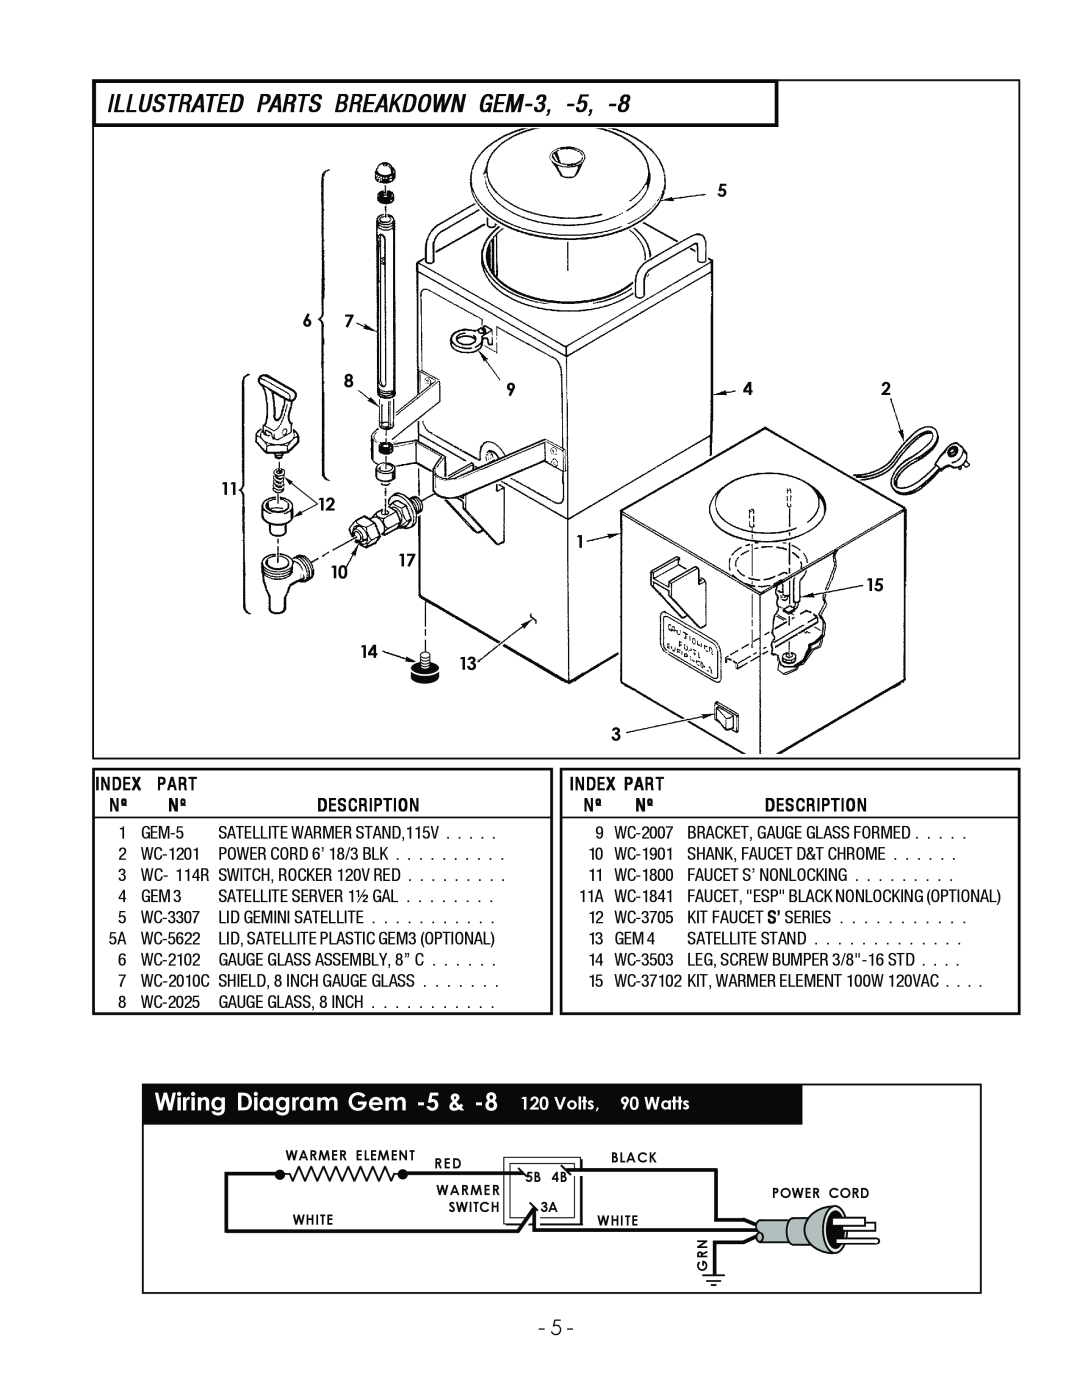 Wibur Curtis Company CA 90640 ILLUSTRATED PARTS BREAKDOWN GEM-3, Wiring Diagram Gem -5& -8 120 Volts, 90 Watts, Part 